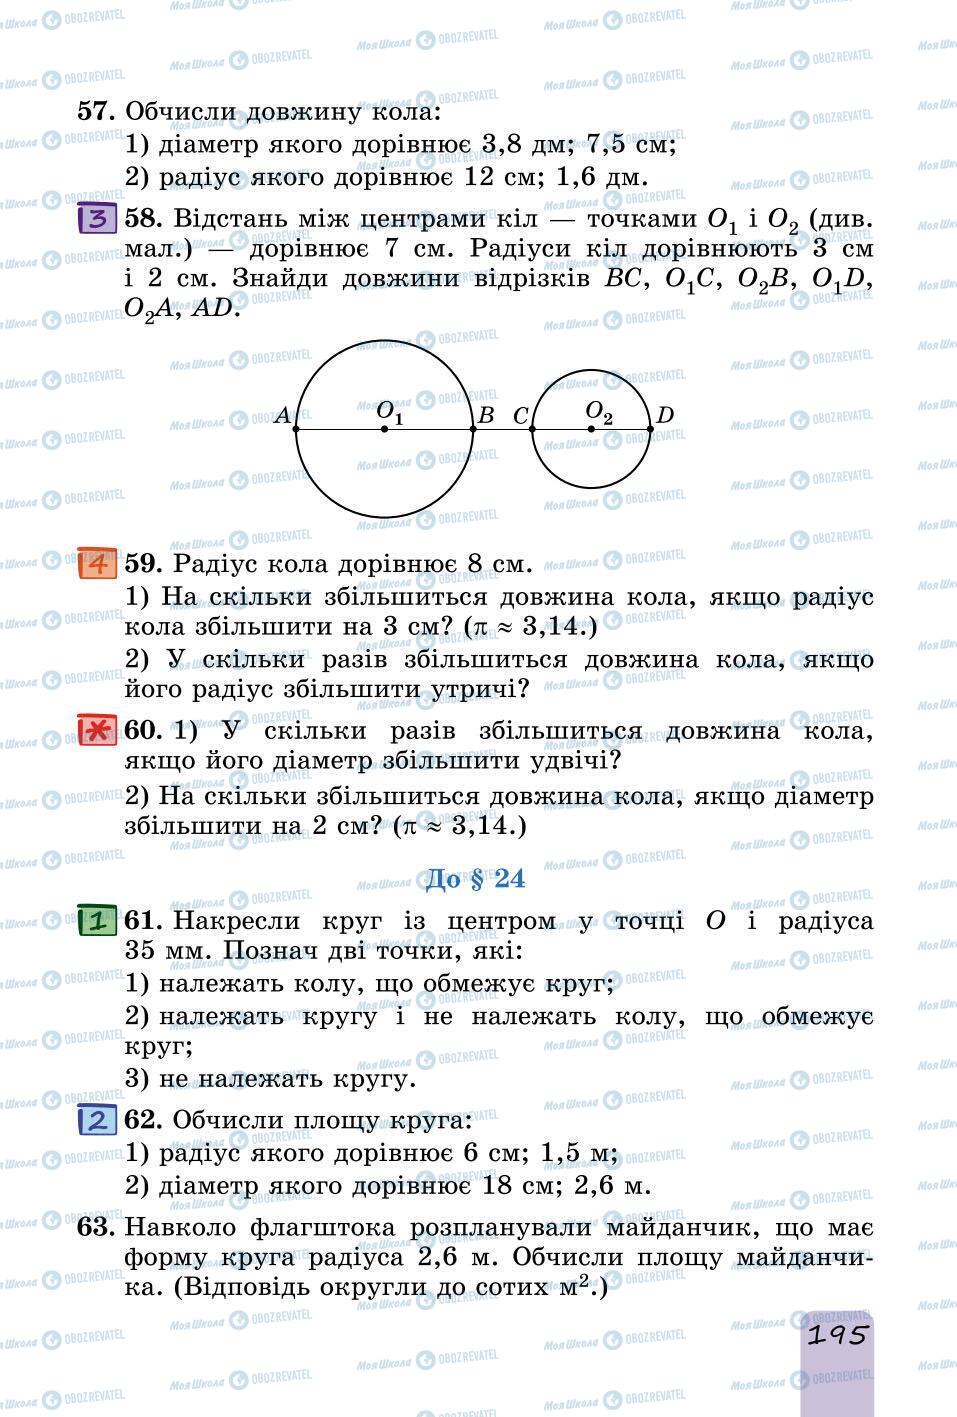 Учебники Математика 6 класс страница 195